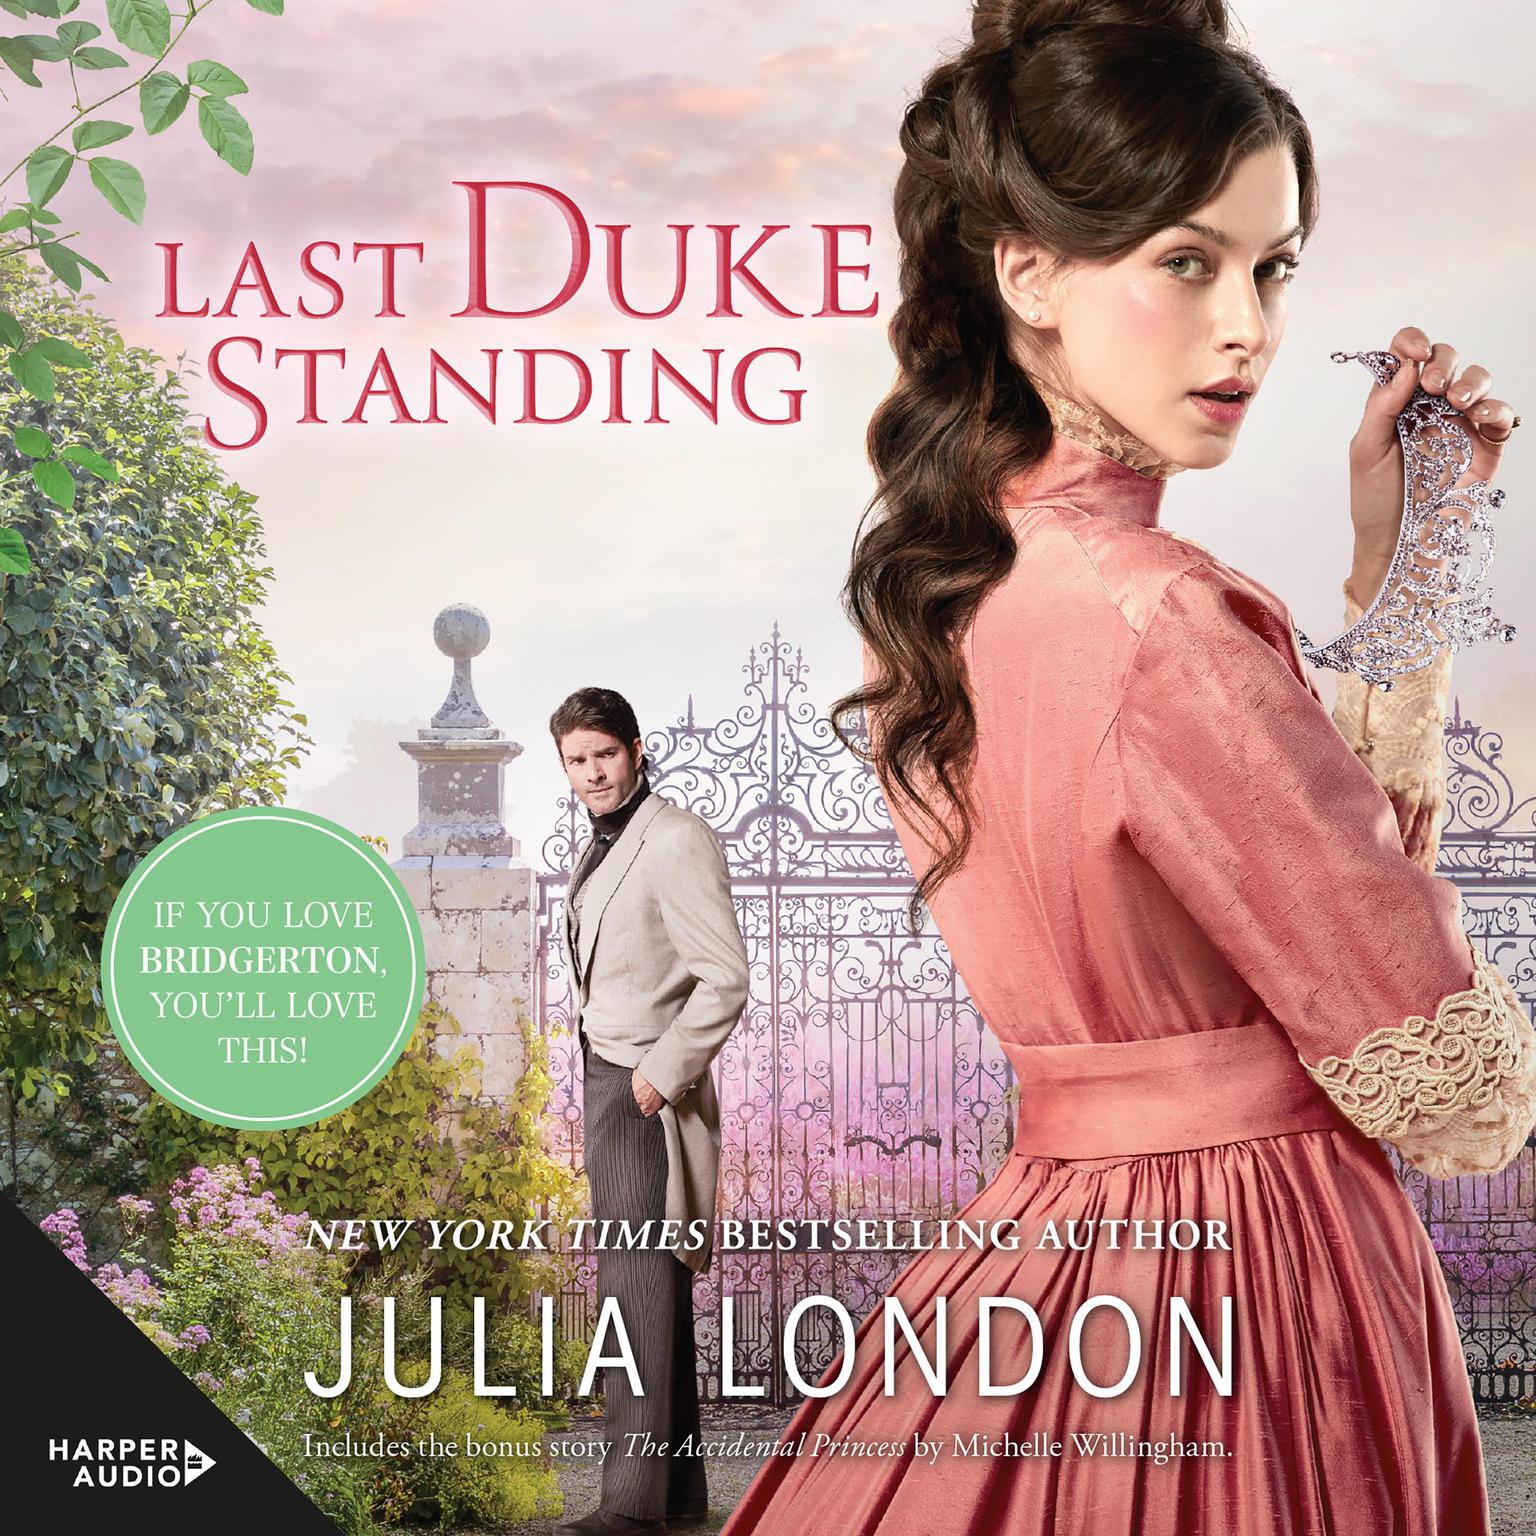 Last Duke Standing Audiobook, by Julia London